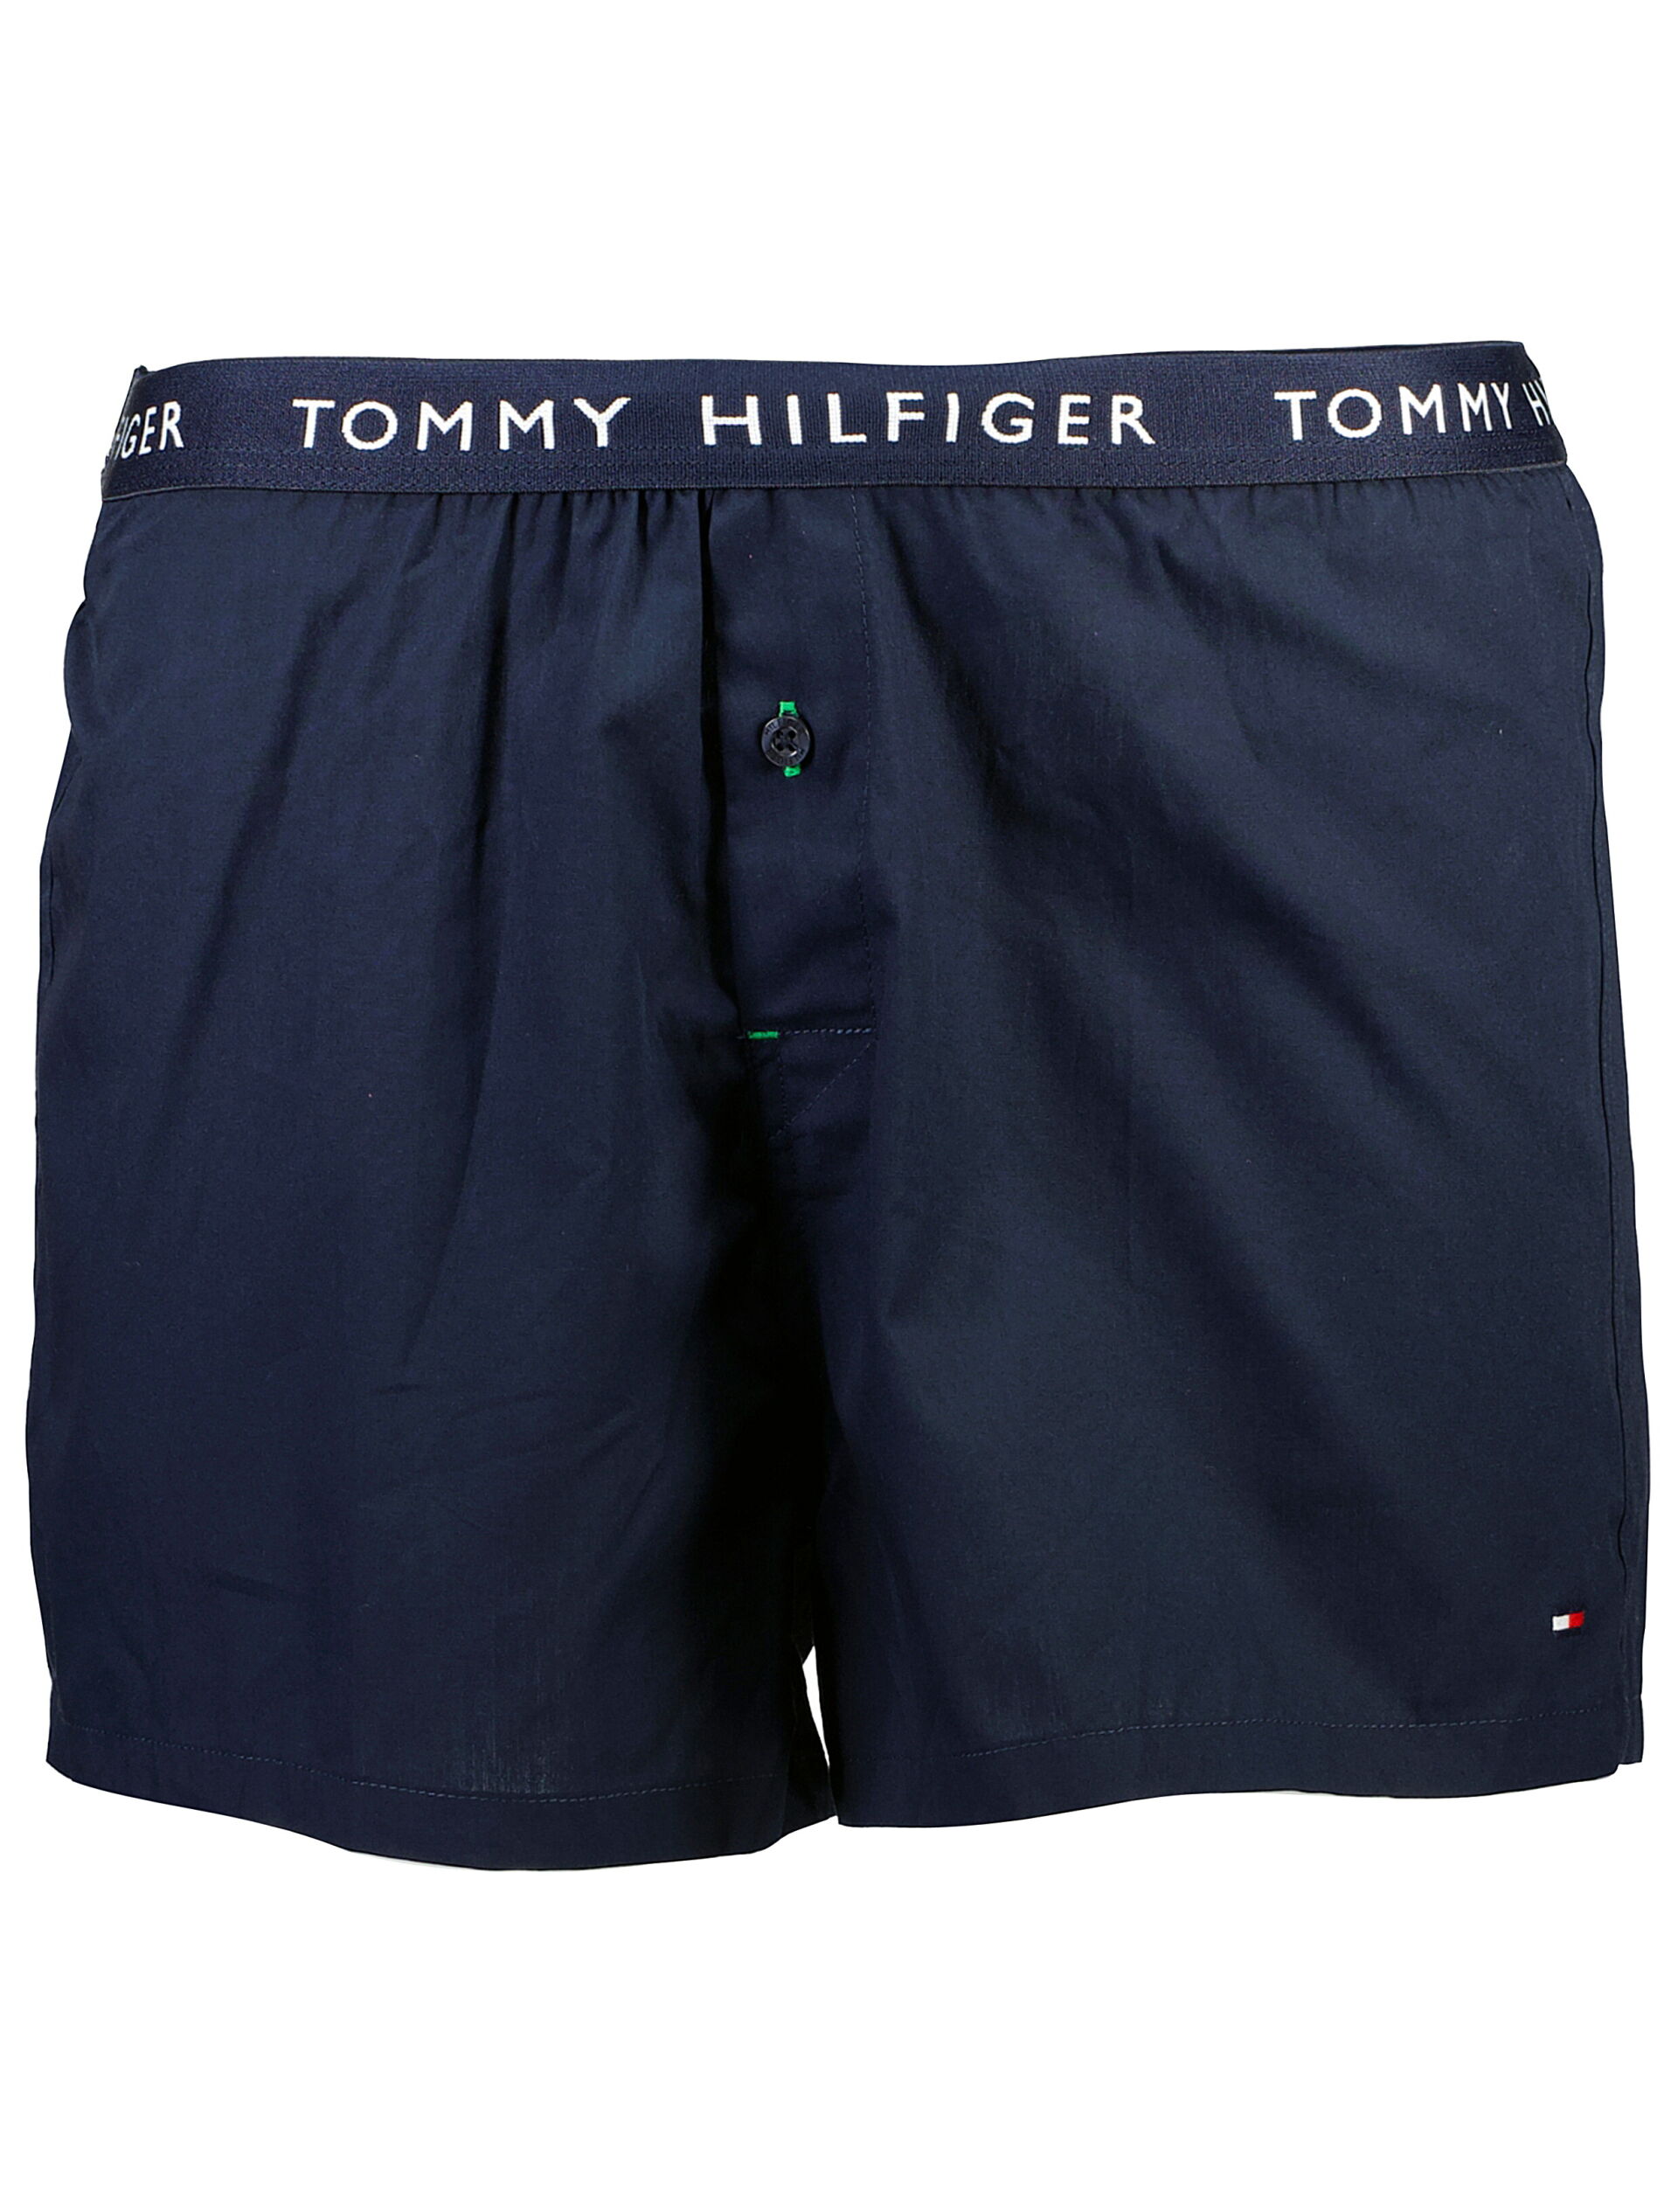 Tommy Hilfiger  Boxershorts 90-900840